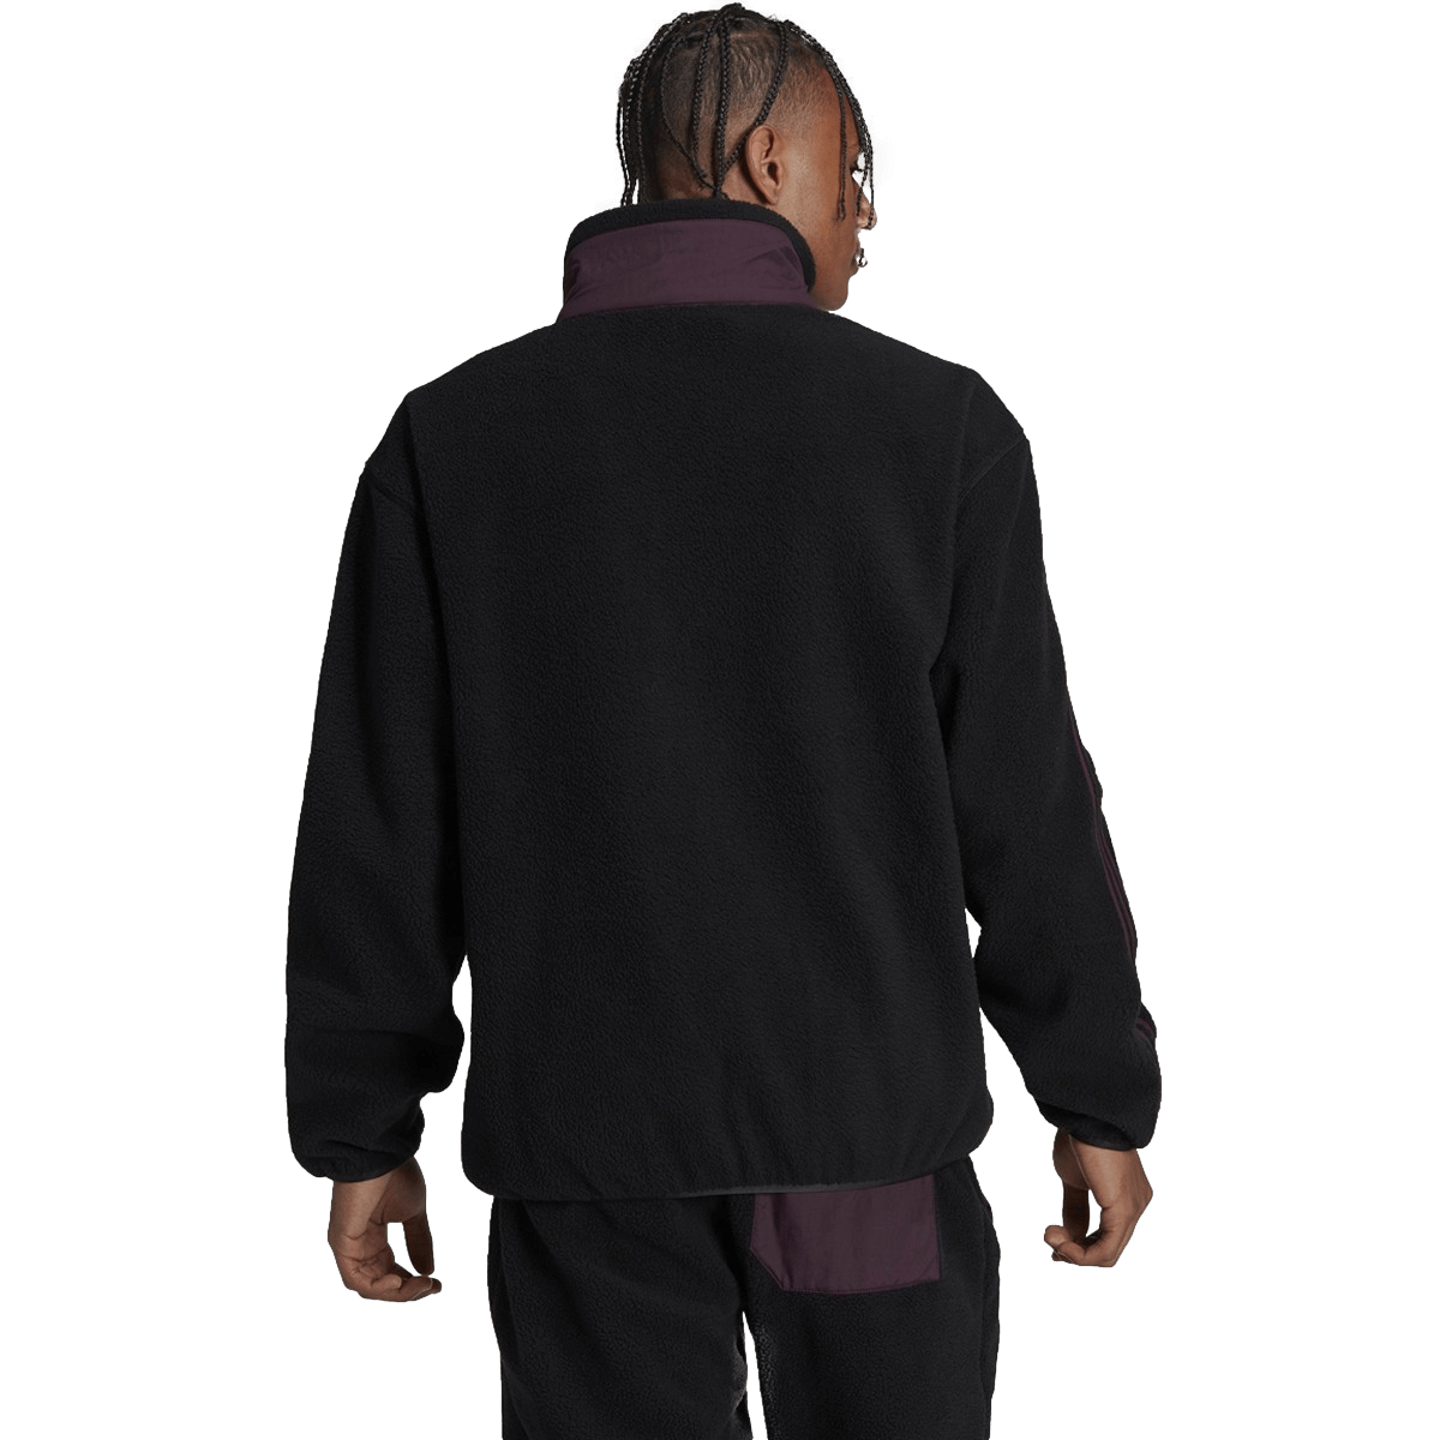 Adidas Men's Germany Lifestyle Fleece Jacket - Black